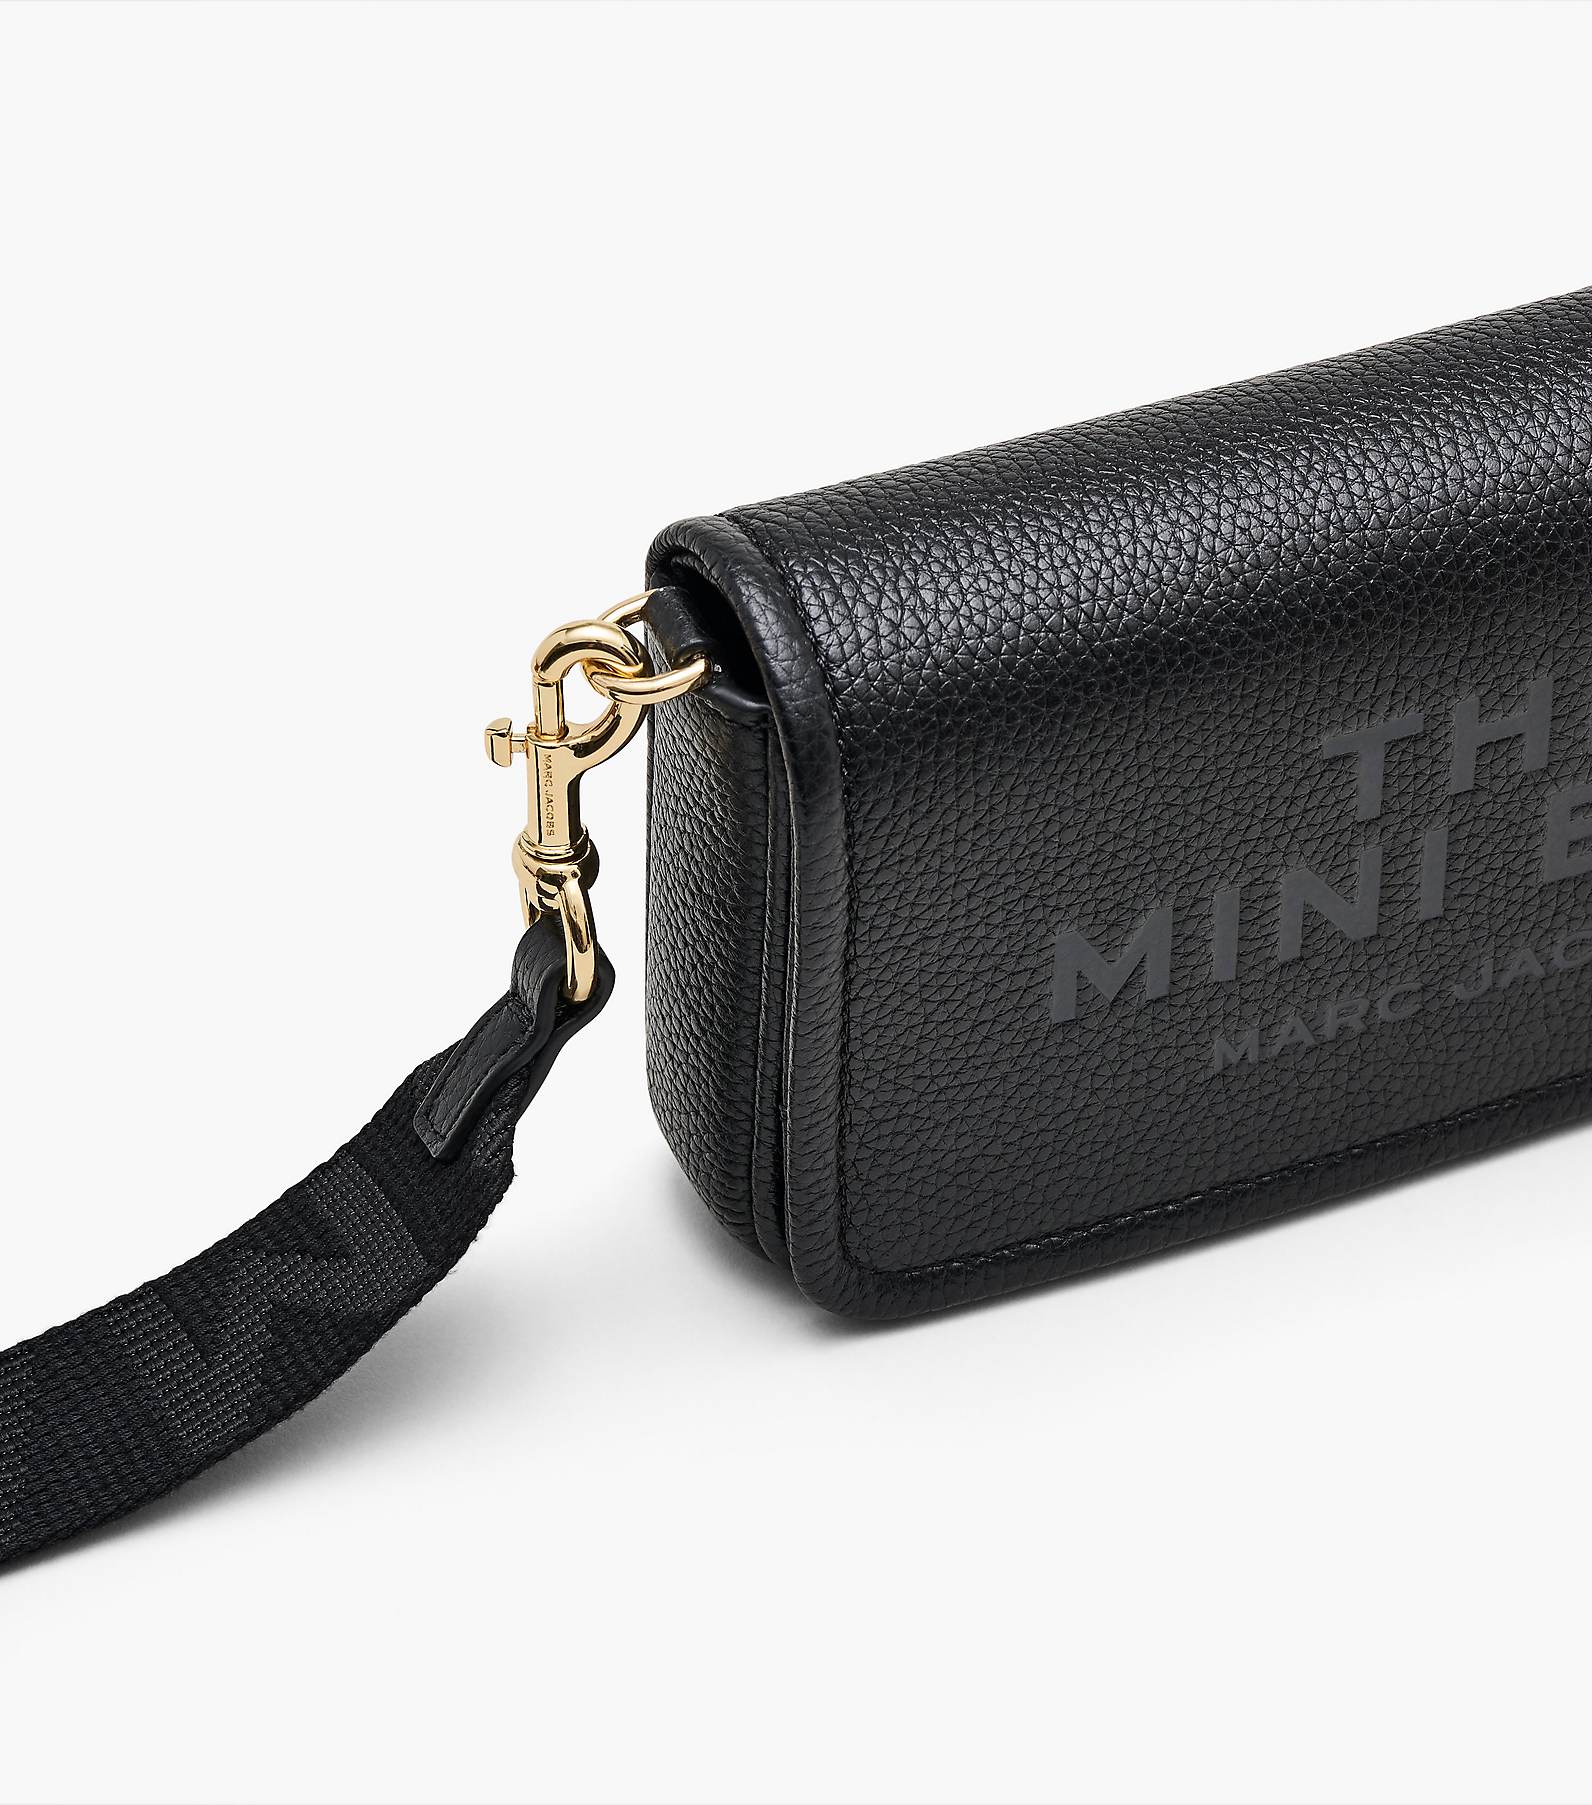 The Leather Mini Bag(null)